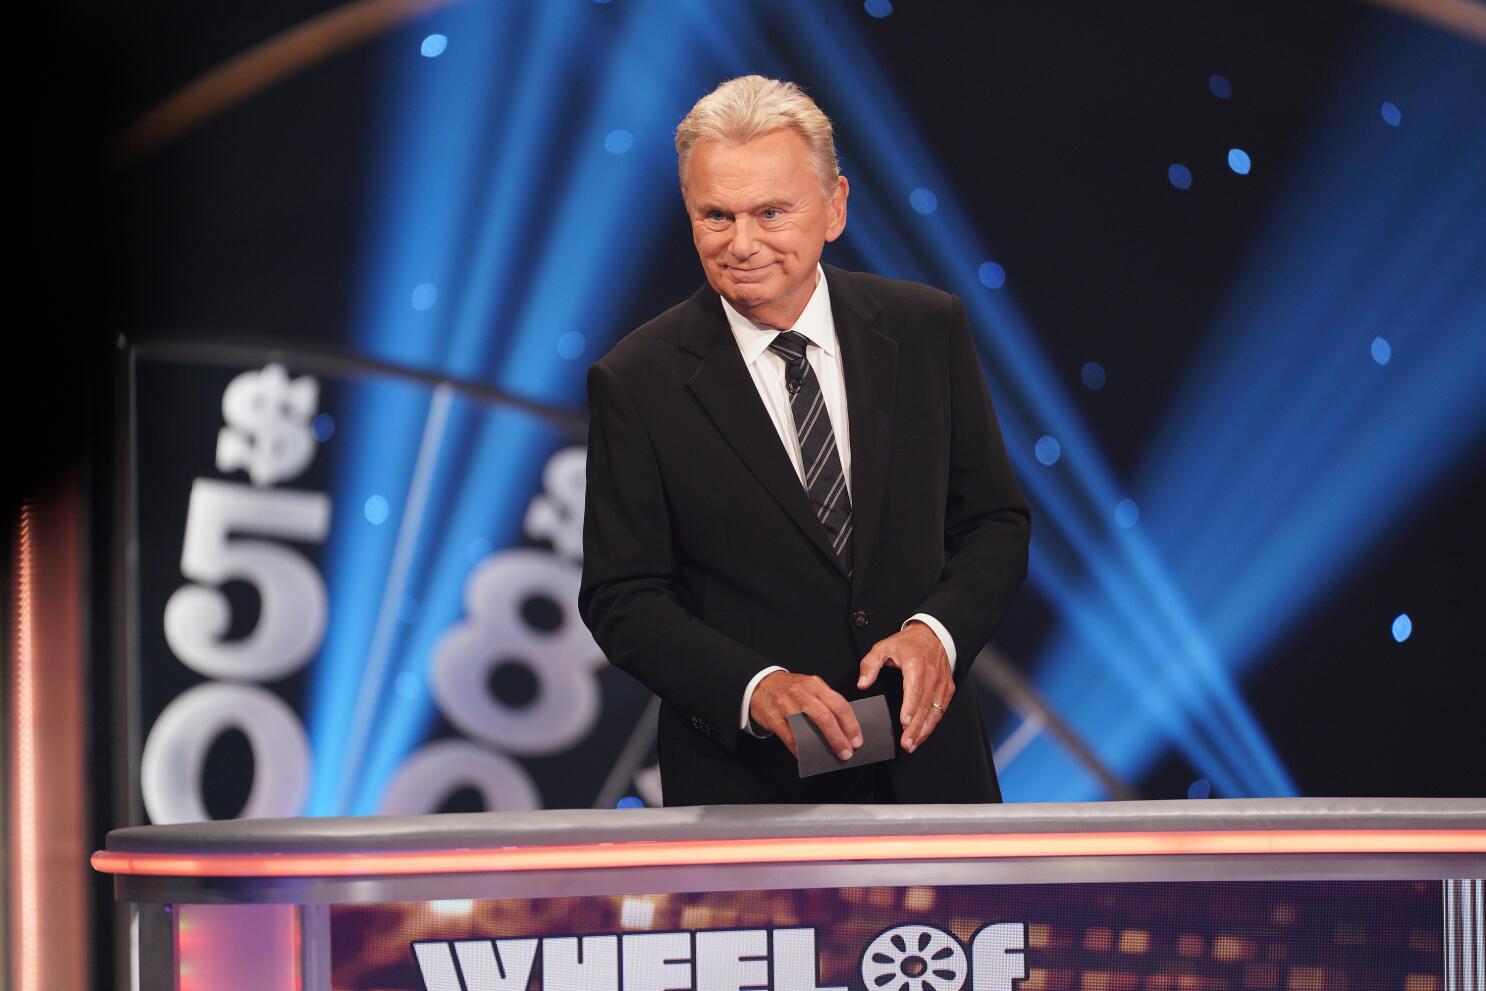 Wheel of Fortune' host Pat Sajak will retire: 'A wonderful ride